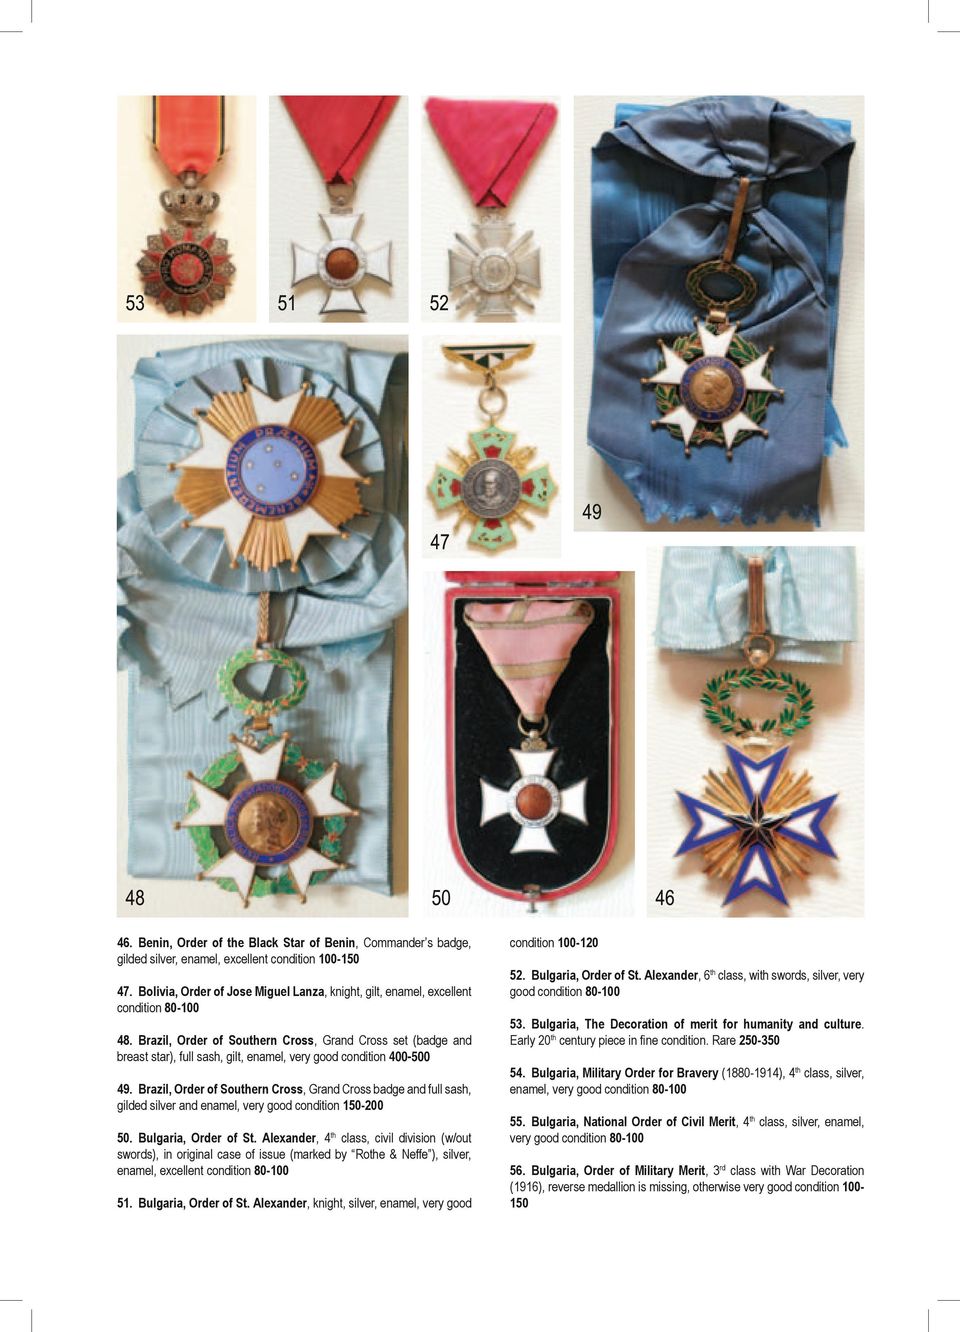 Brazil, Order of Southern Cross, Grand Cross set (badge and breast star), full sash, gilt, enamel, very good condition 400-500 49.